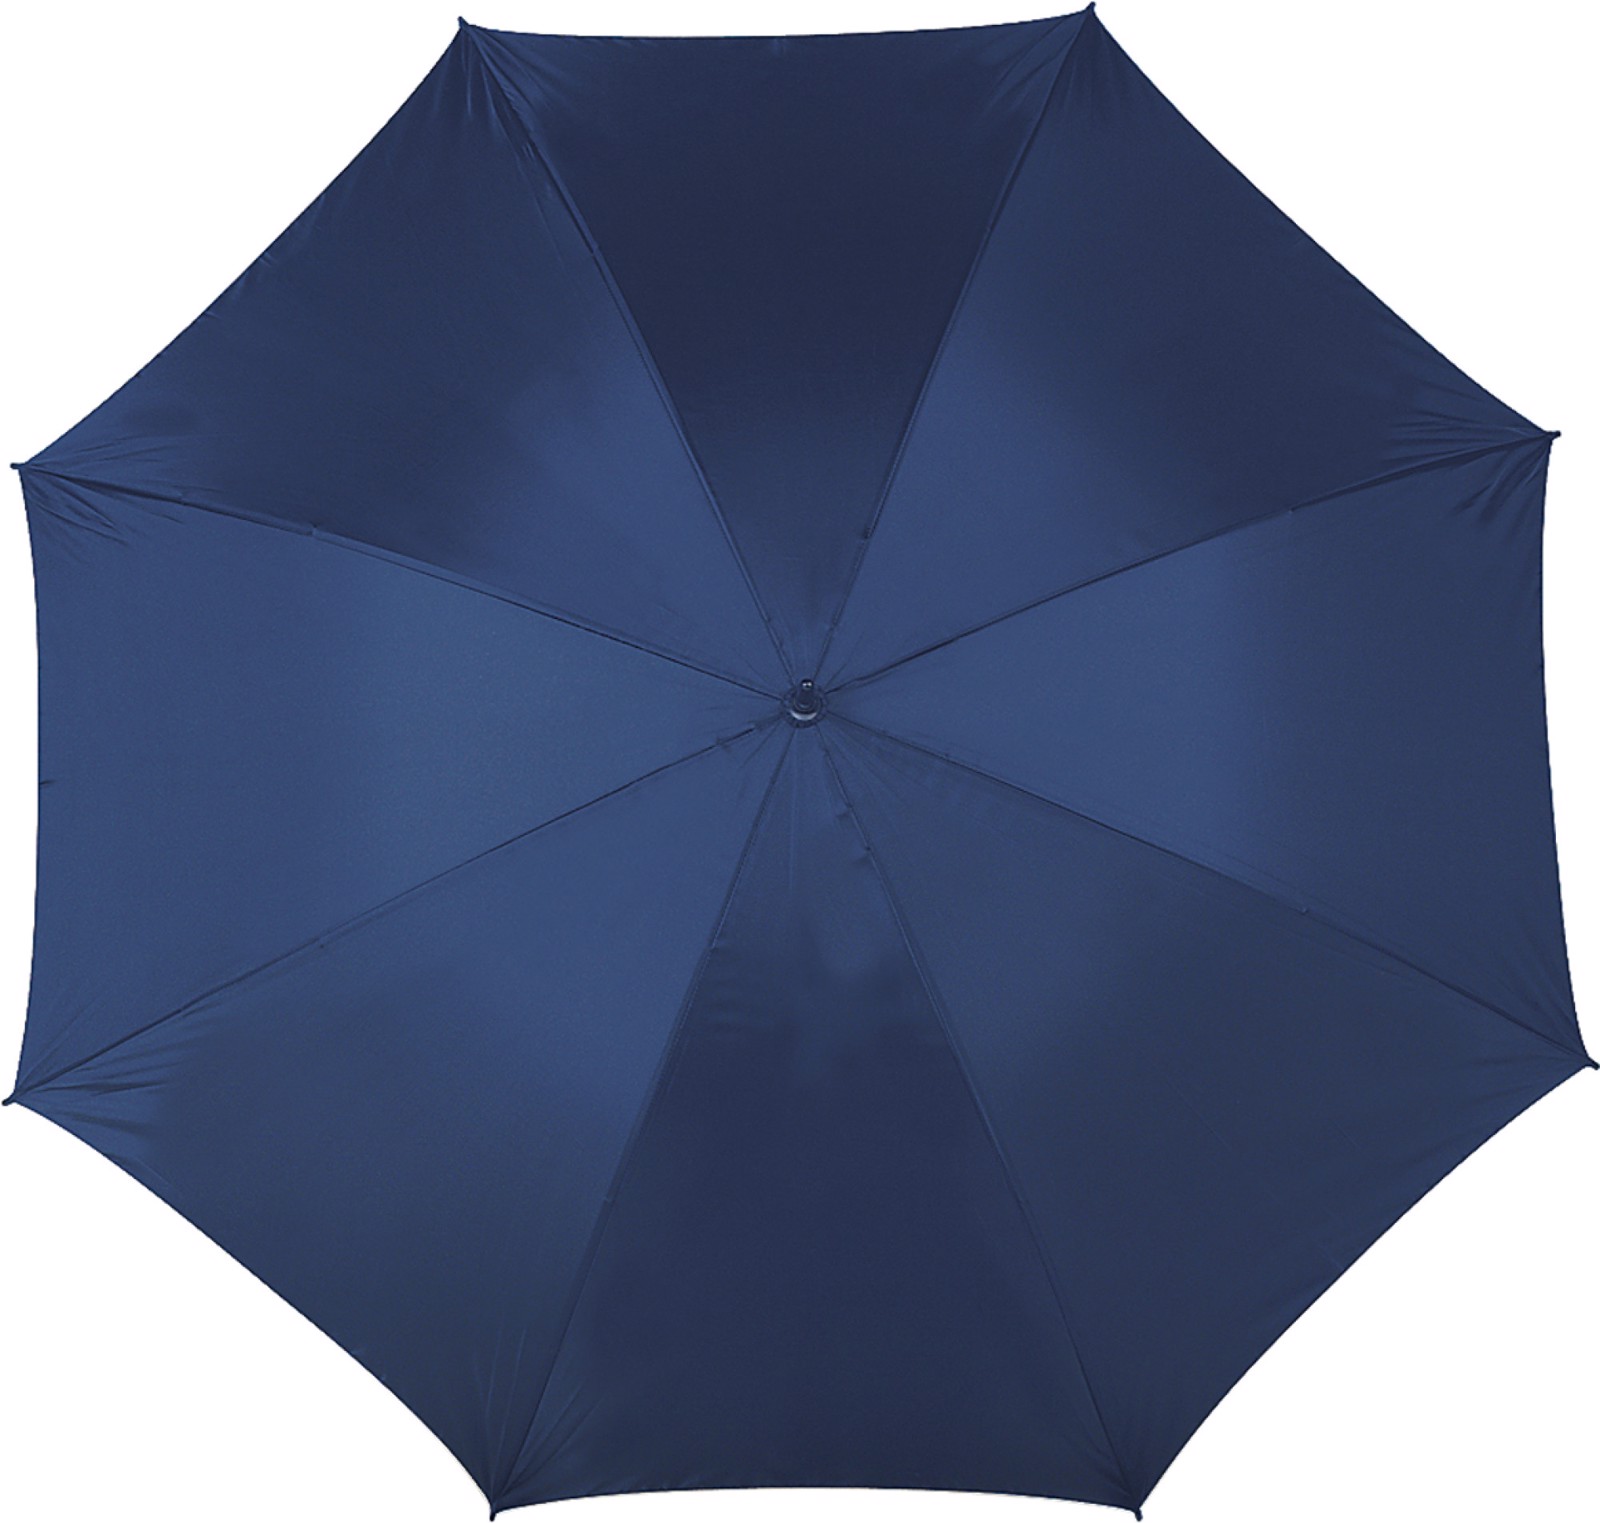 Polyester (210T) umbrella - Blue